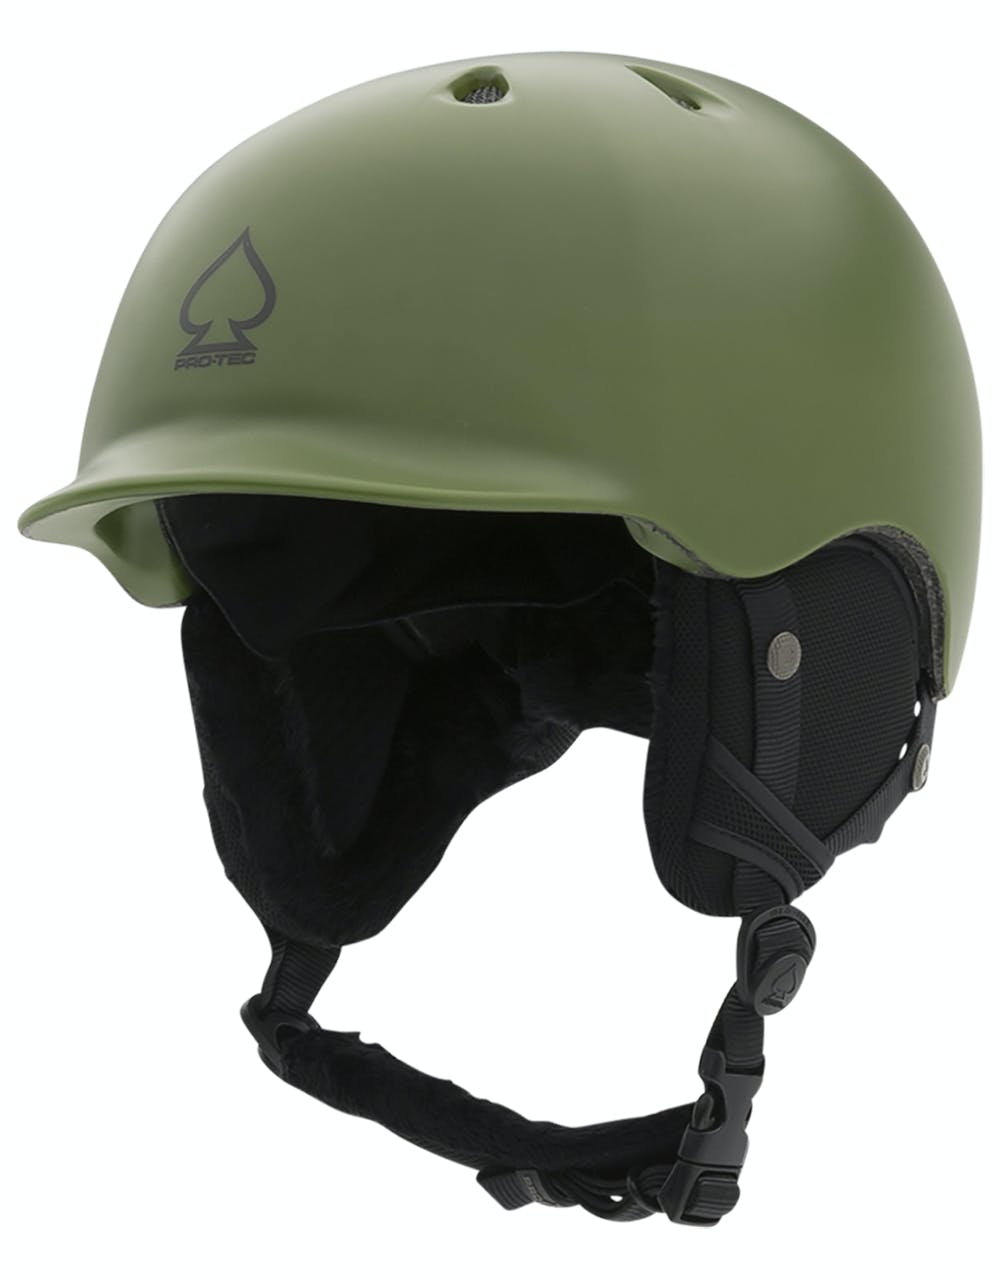 Pro-Tec Riot Snowboard Helmet - Matte Army